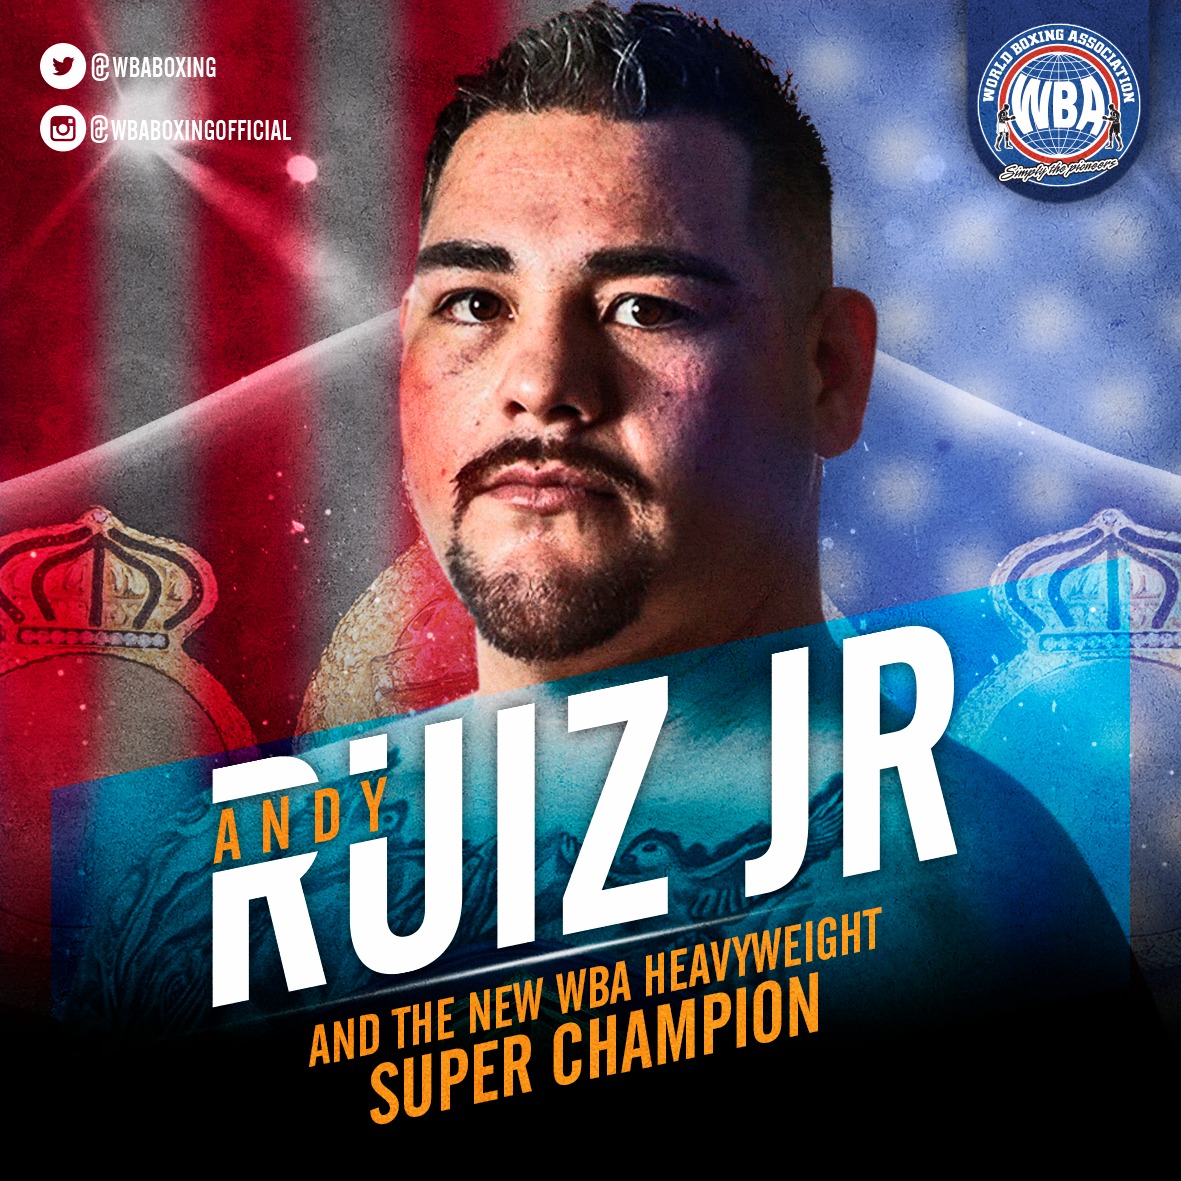 Andy Ruiz shocks the world with TKO of Anthony Joshua